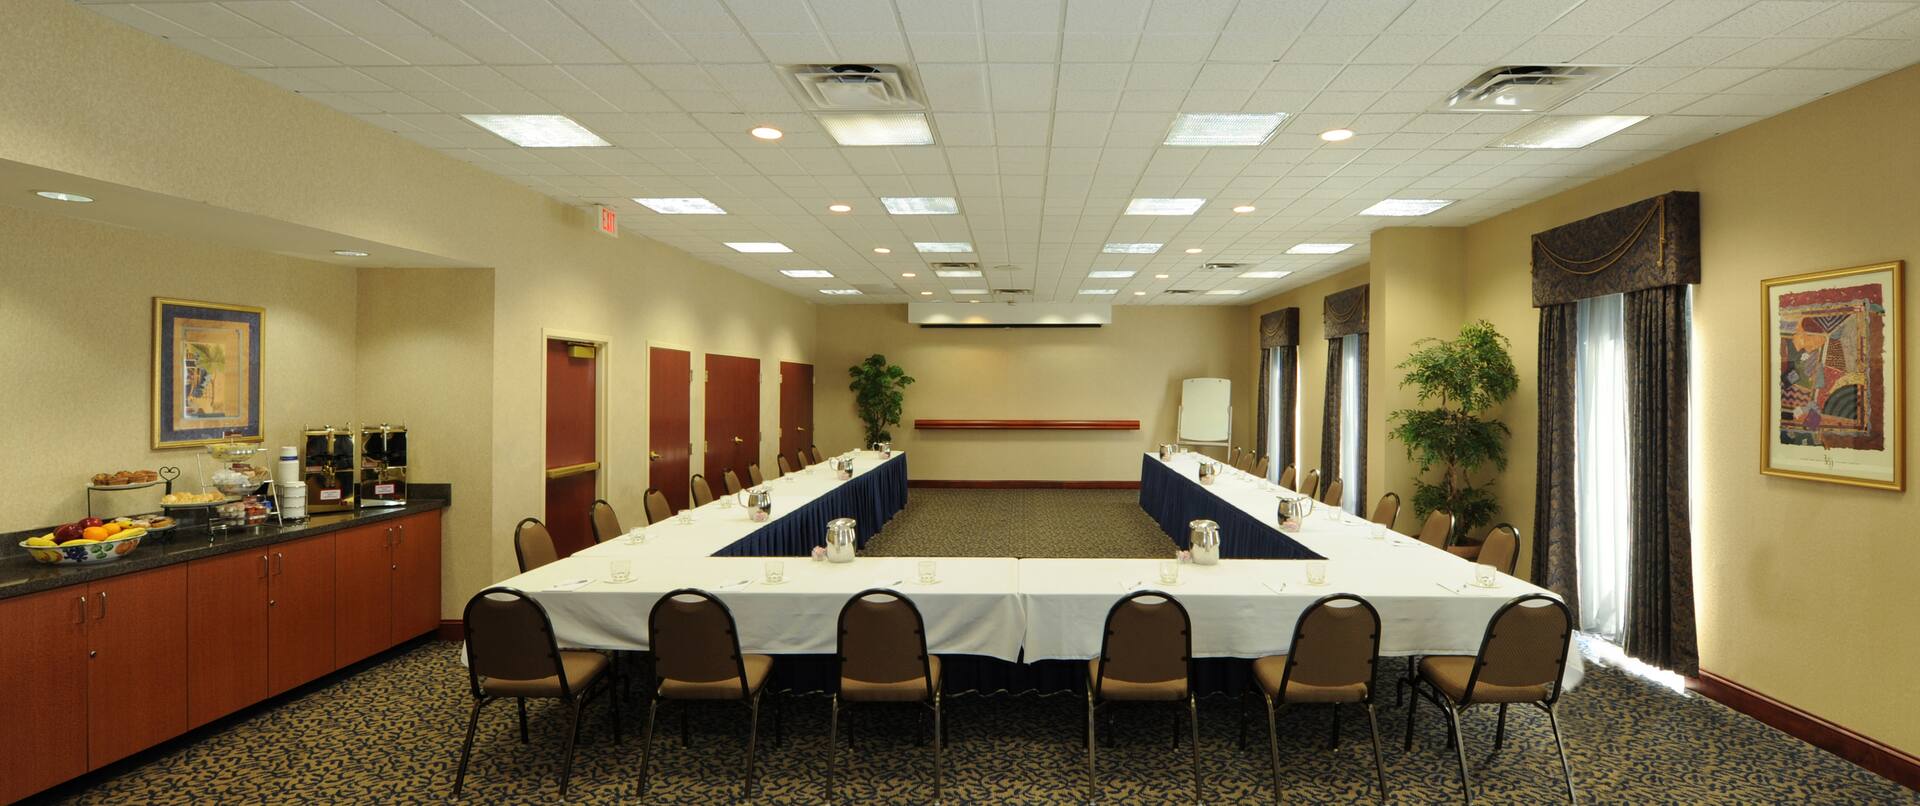 Meeting Room U-shaped setup